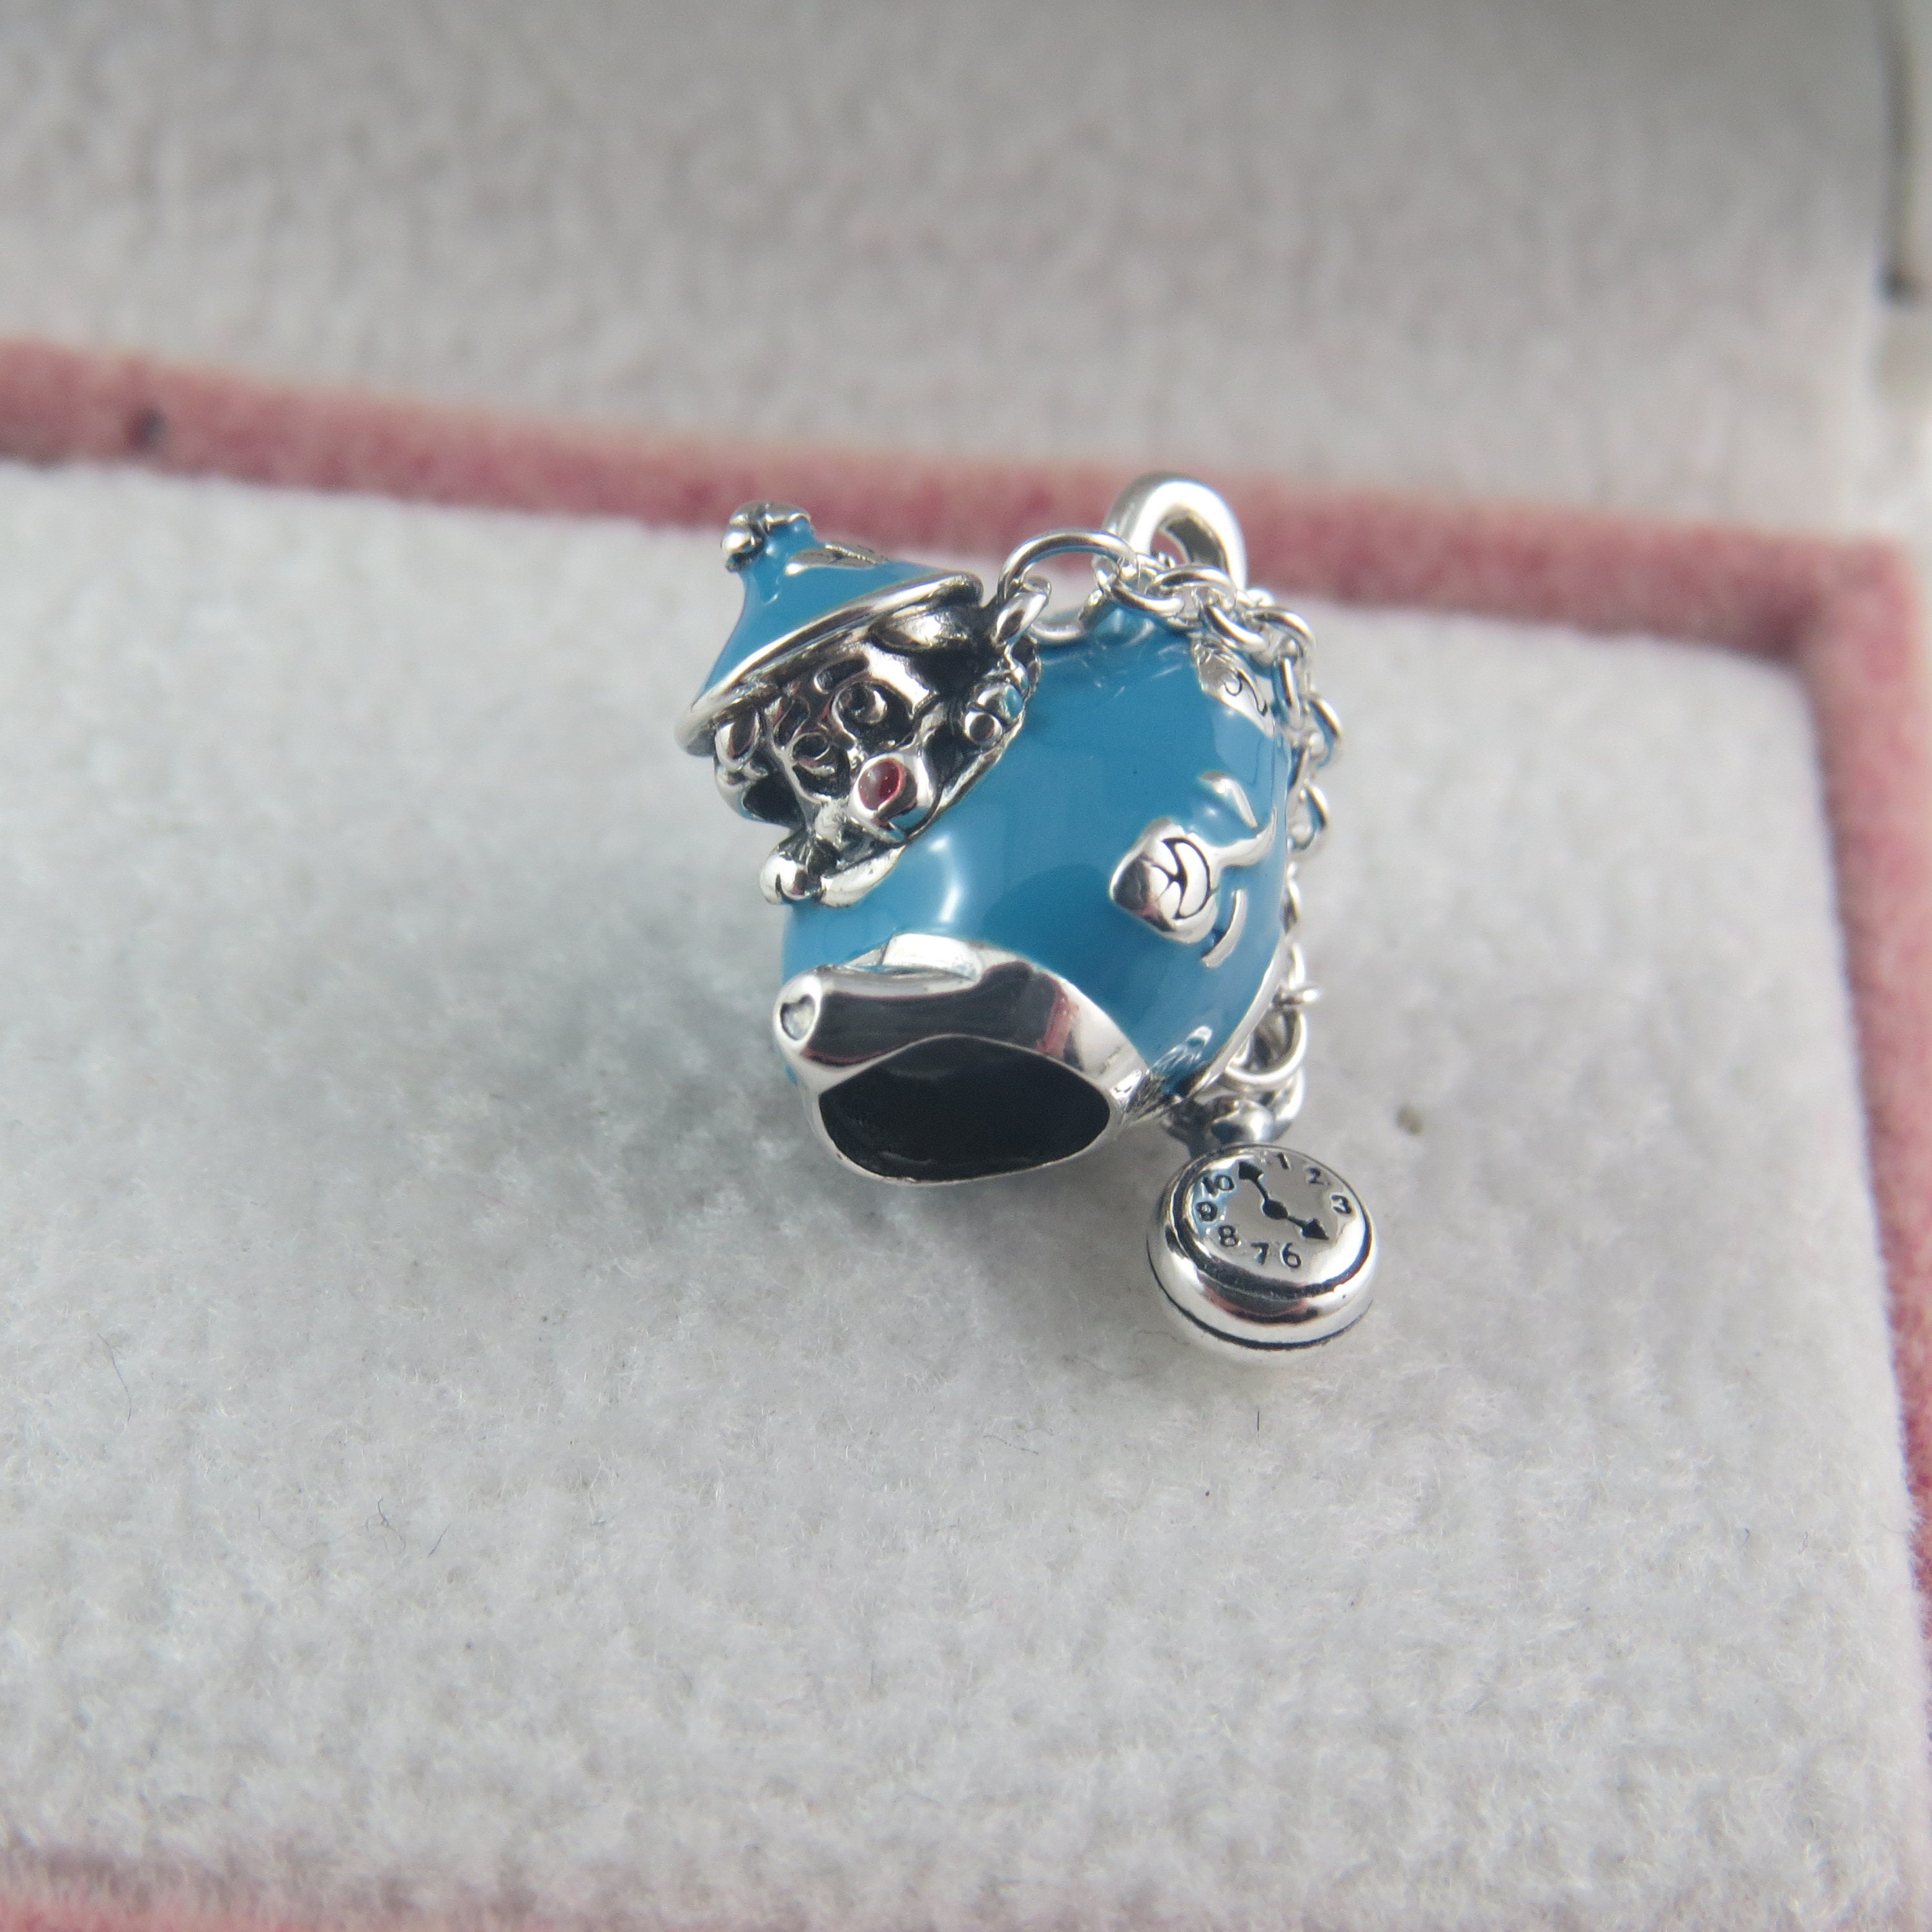 Alice in Wonderland Pandora Charms to Celebrate Your Un-birthday! - Jewelry  